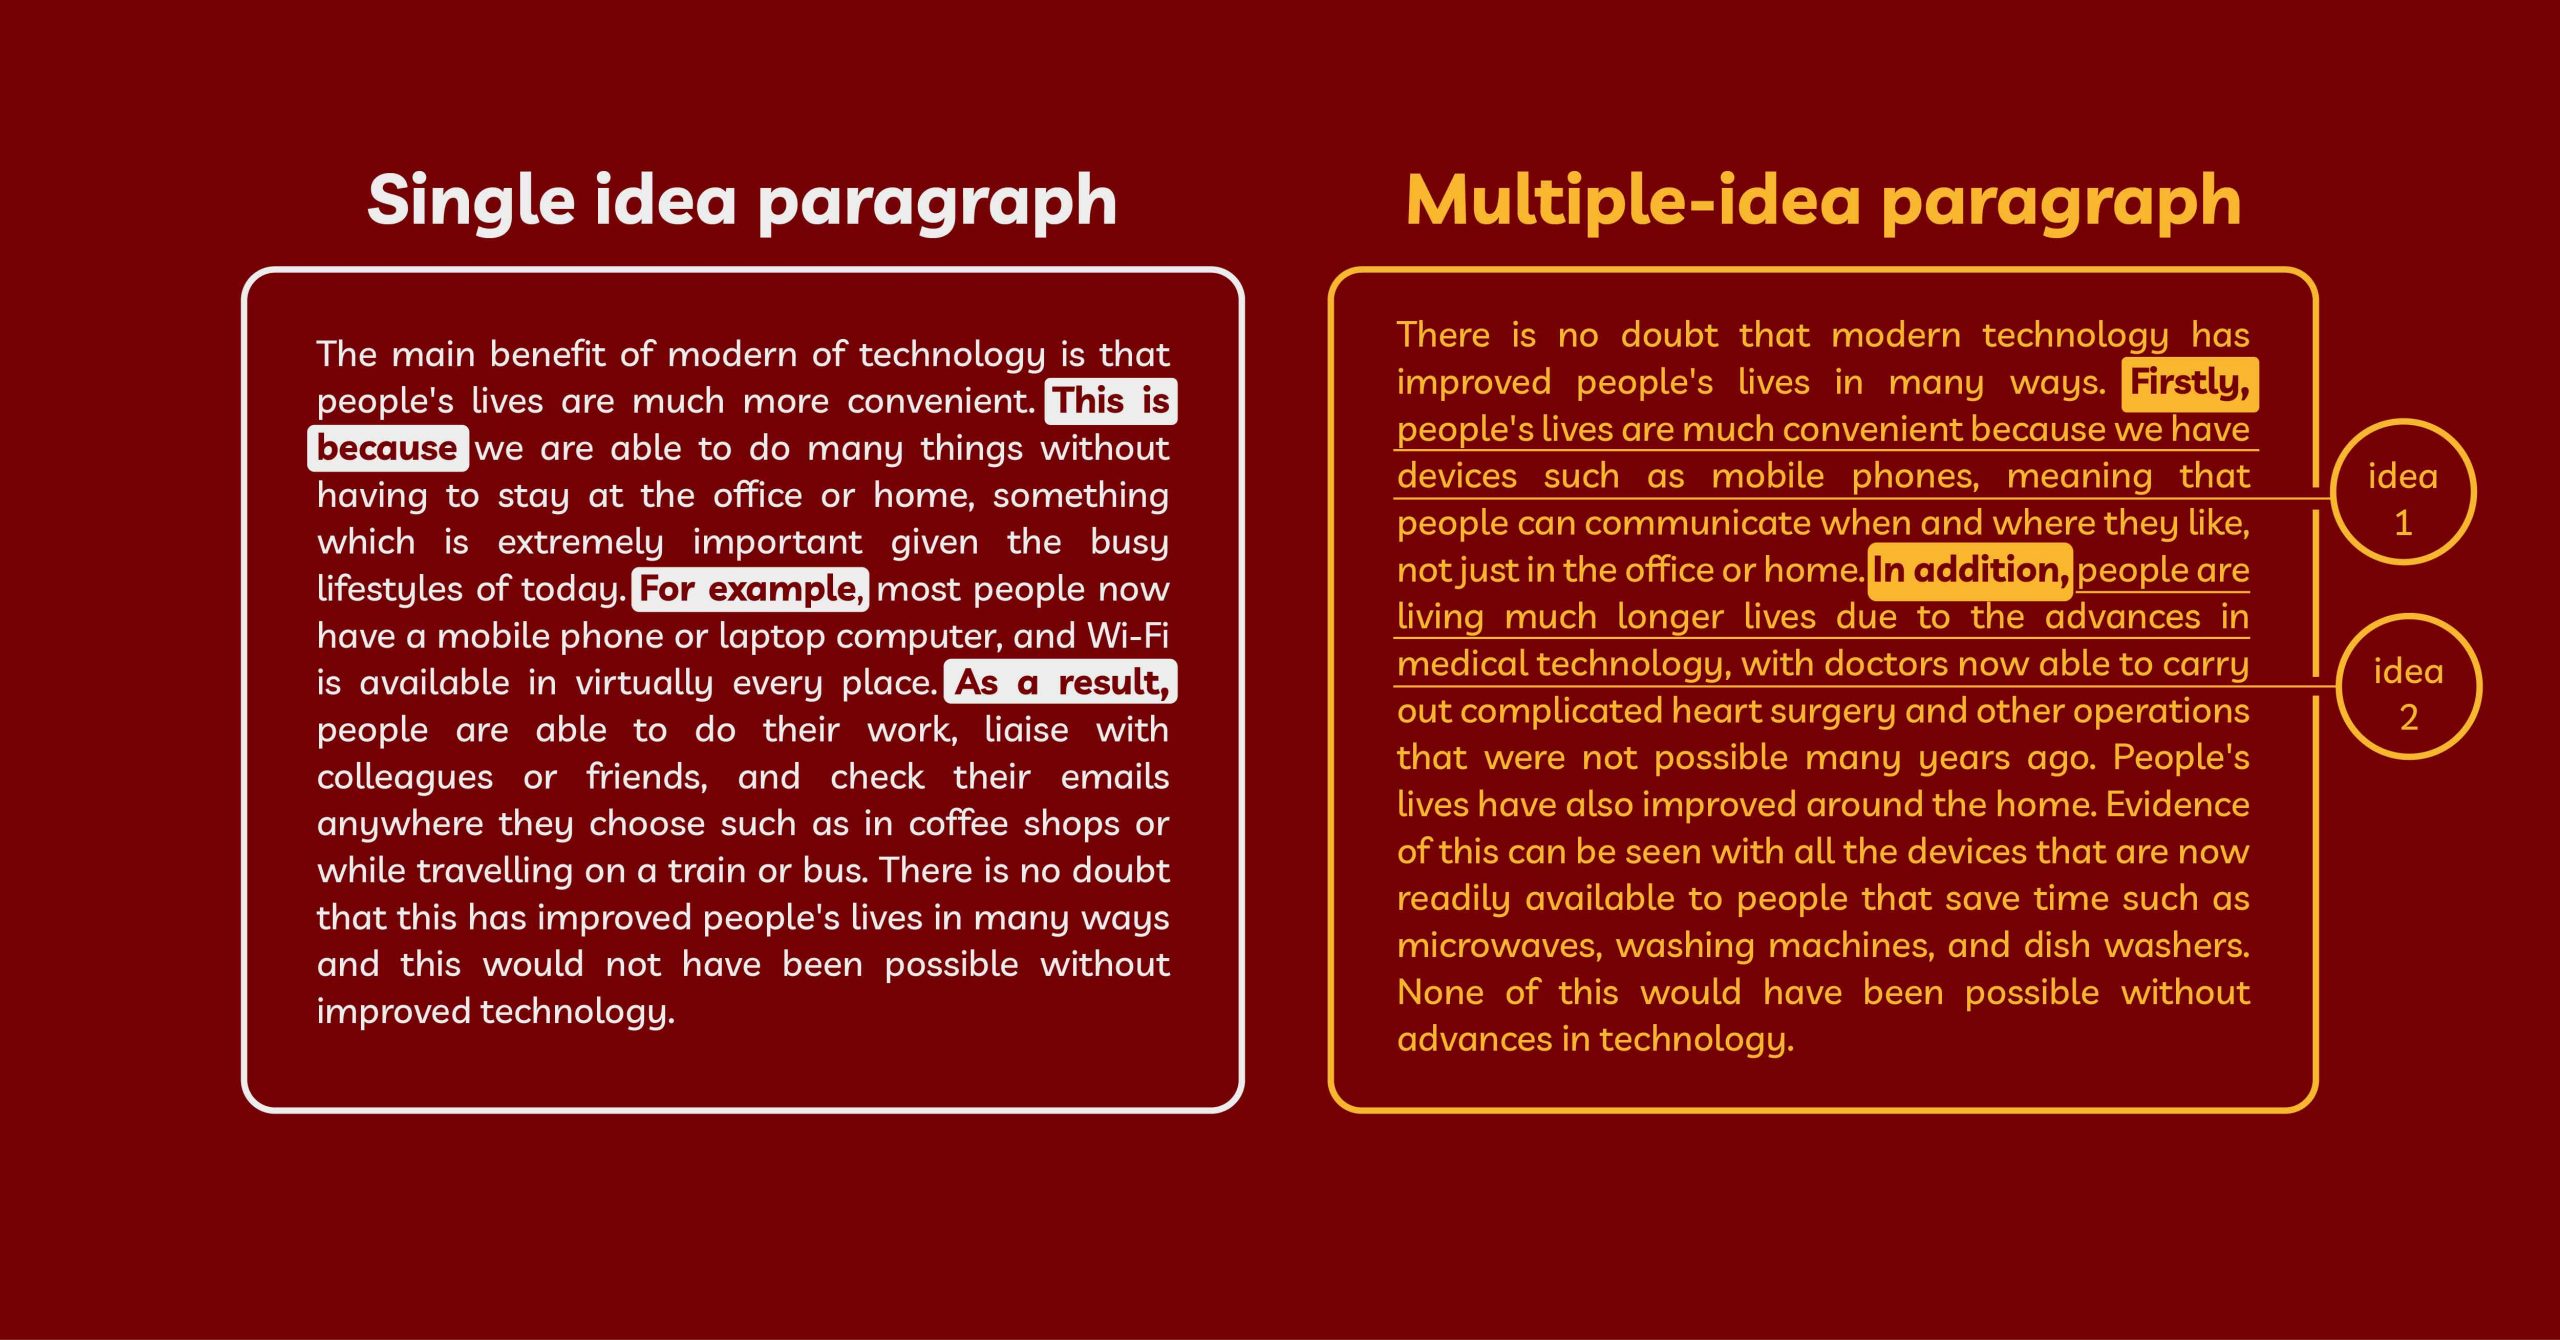 phan-biet-single-idea-va-multiple-idea-paragraph-trong-ielts-writing-task-2-p1